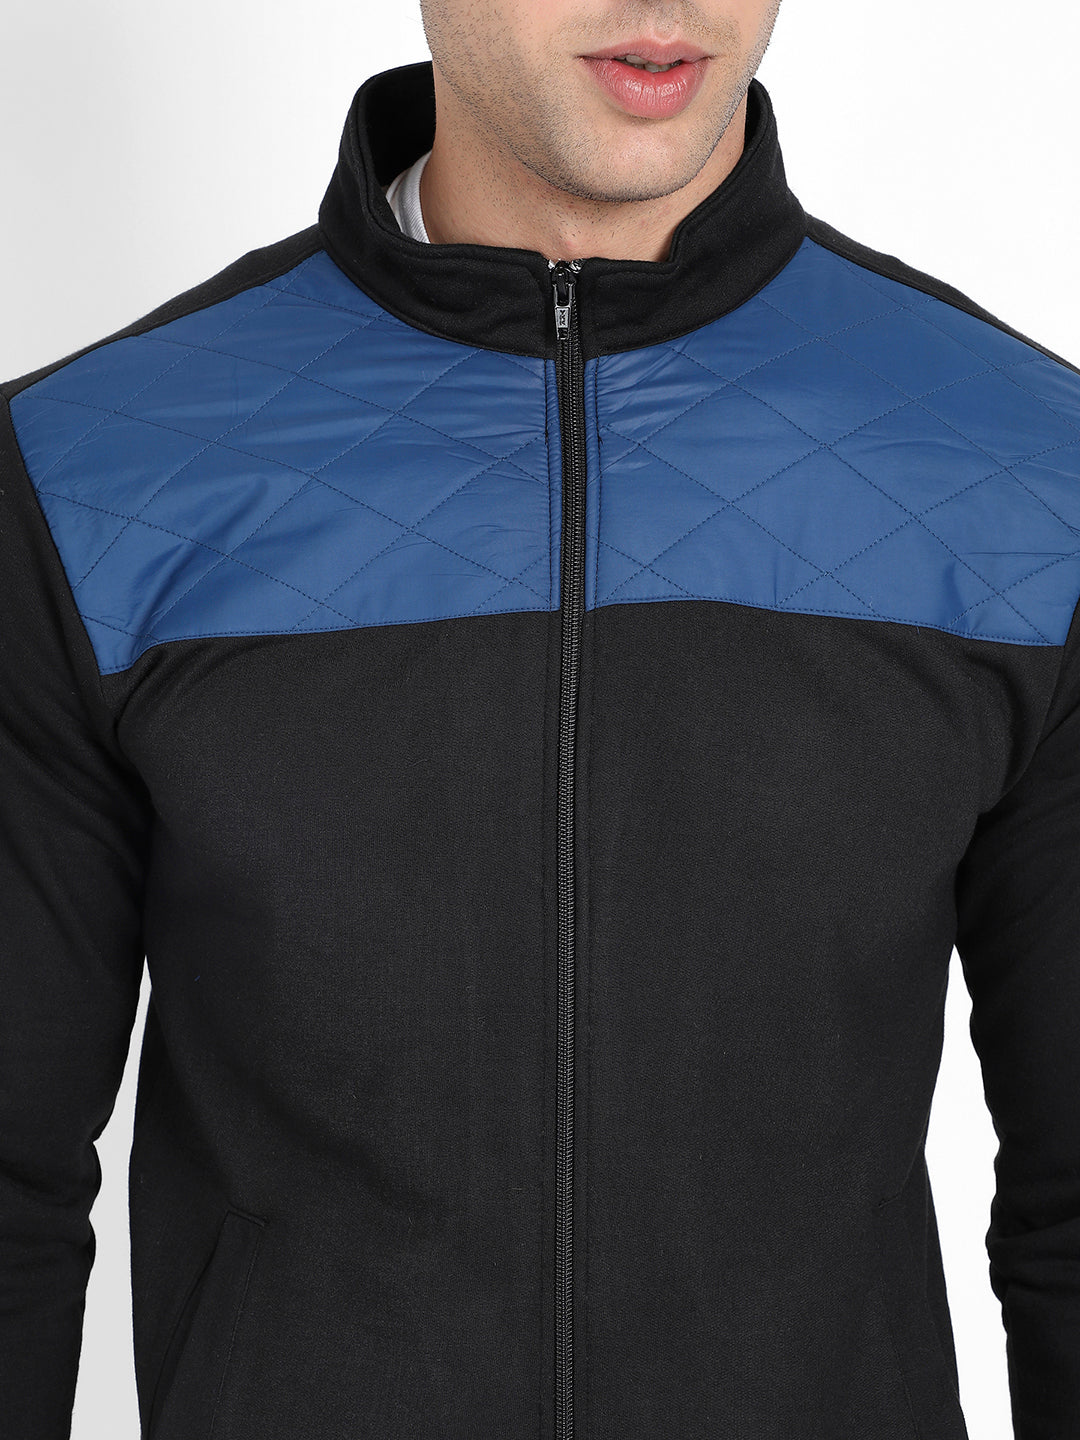 Men's Black & Blue Zip-Front Jacket With Contrast Detail